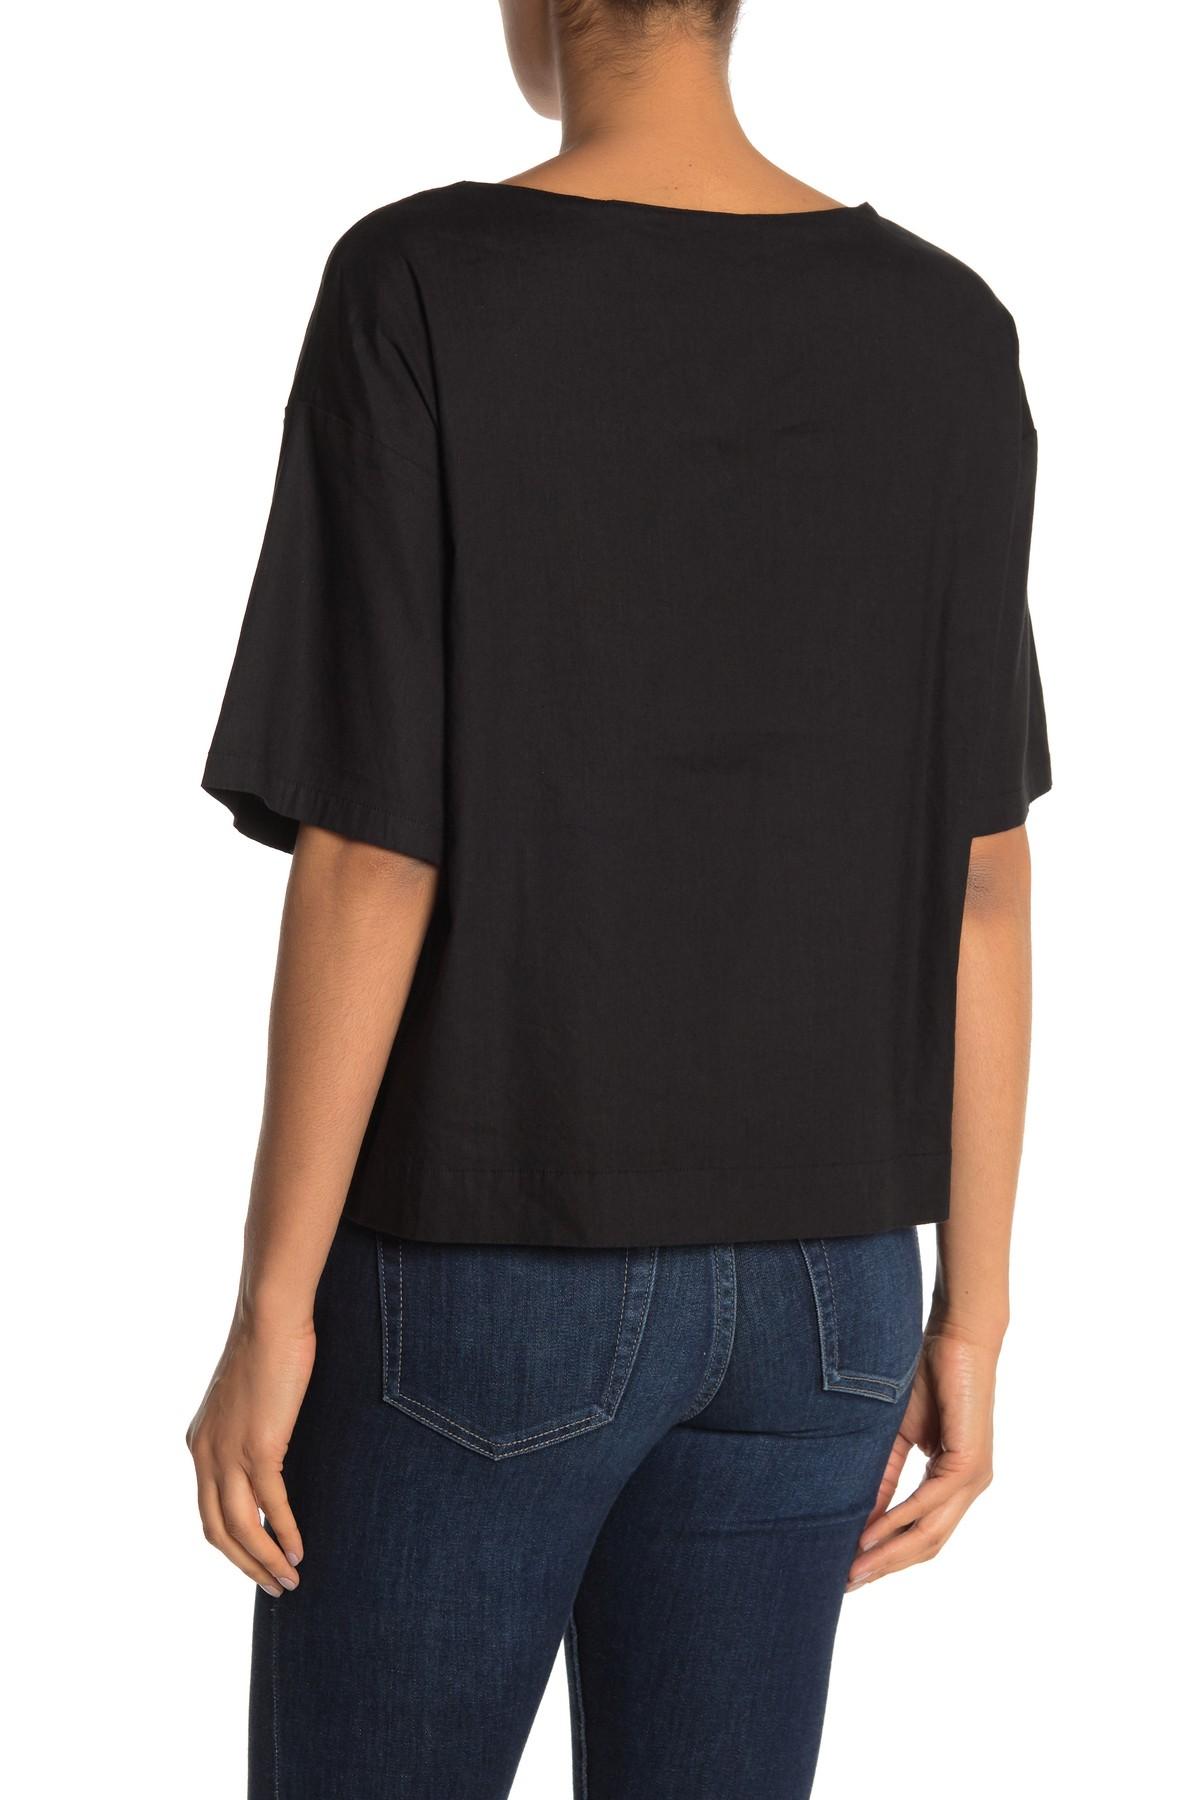 Vince Elbow Length Sleeve Linen Blend T-shirt in Black - Lyst